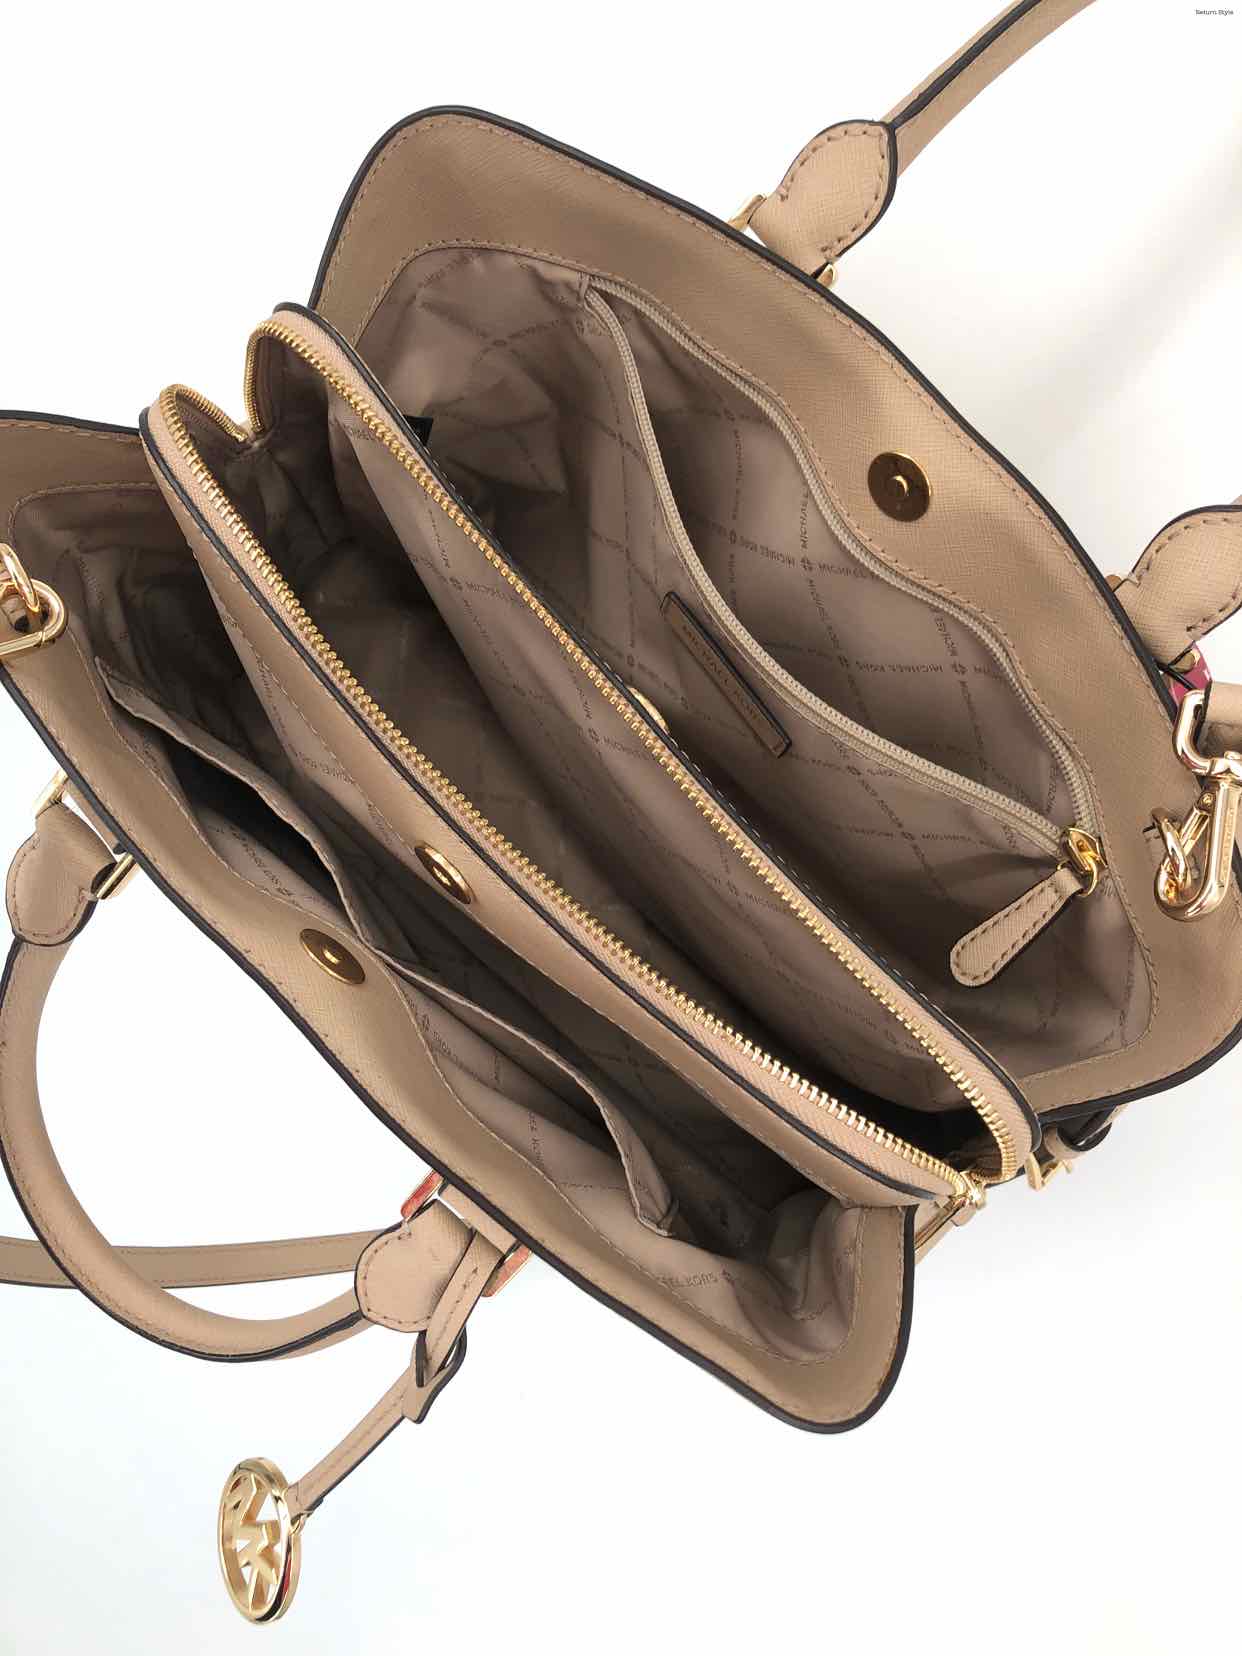 Michael Kors Tan Handbag With Crossbody Strap | eBay